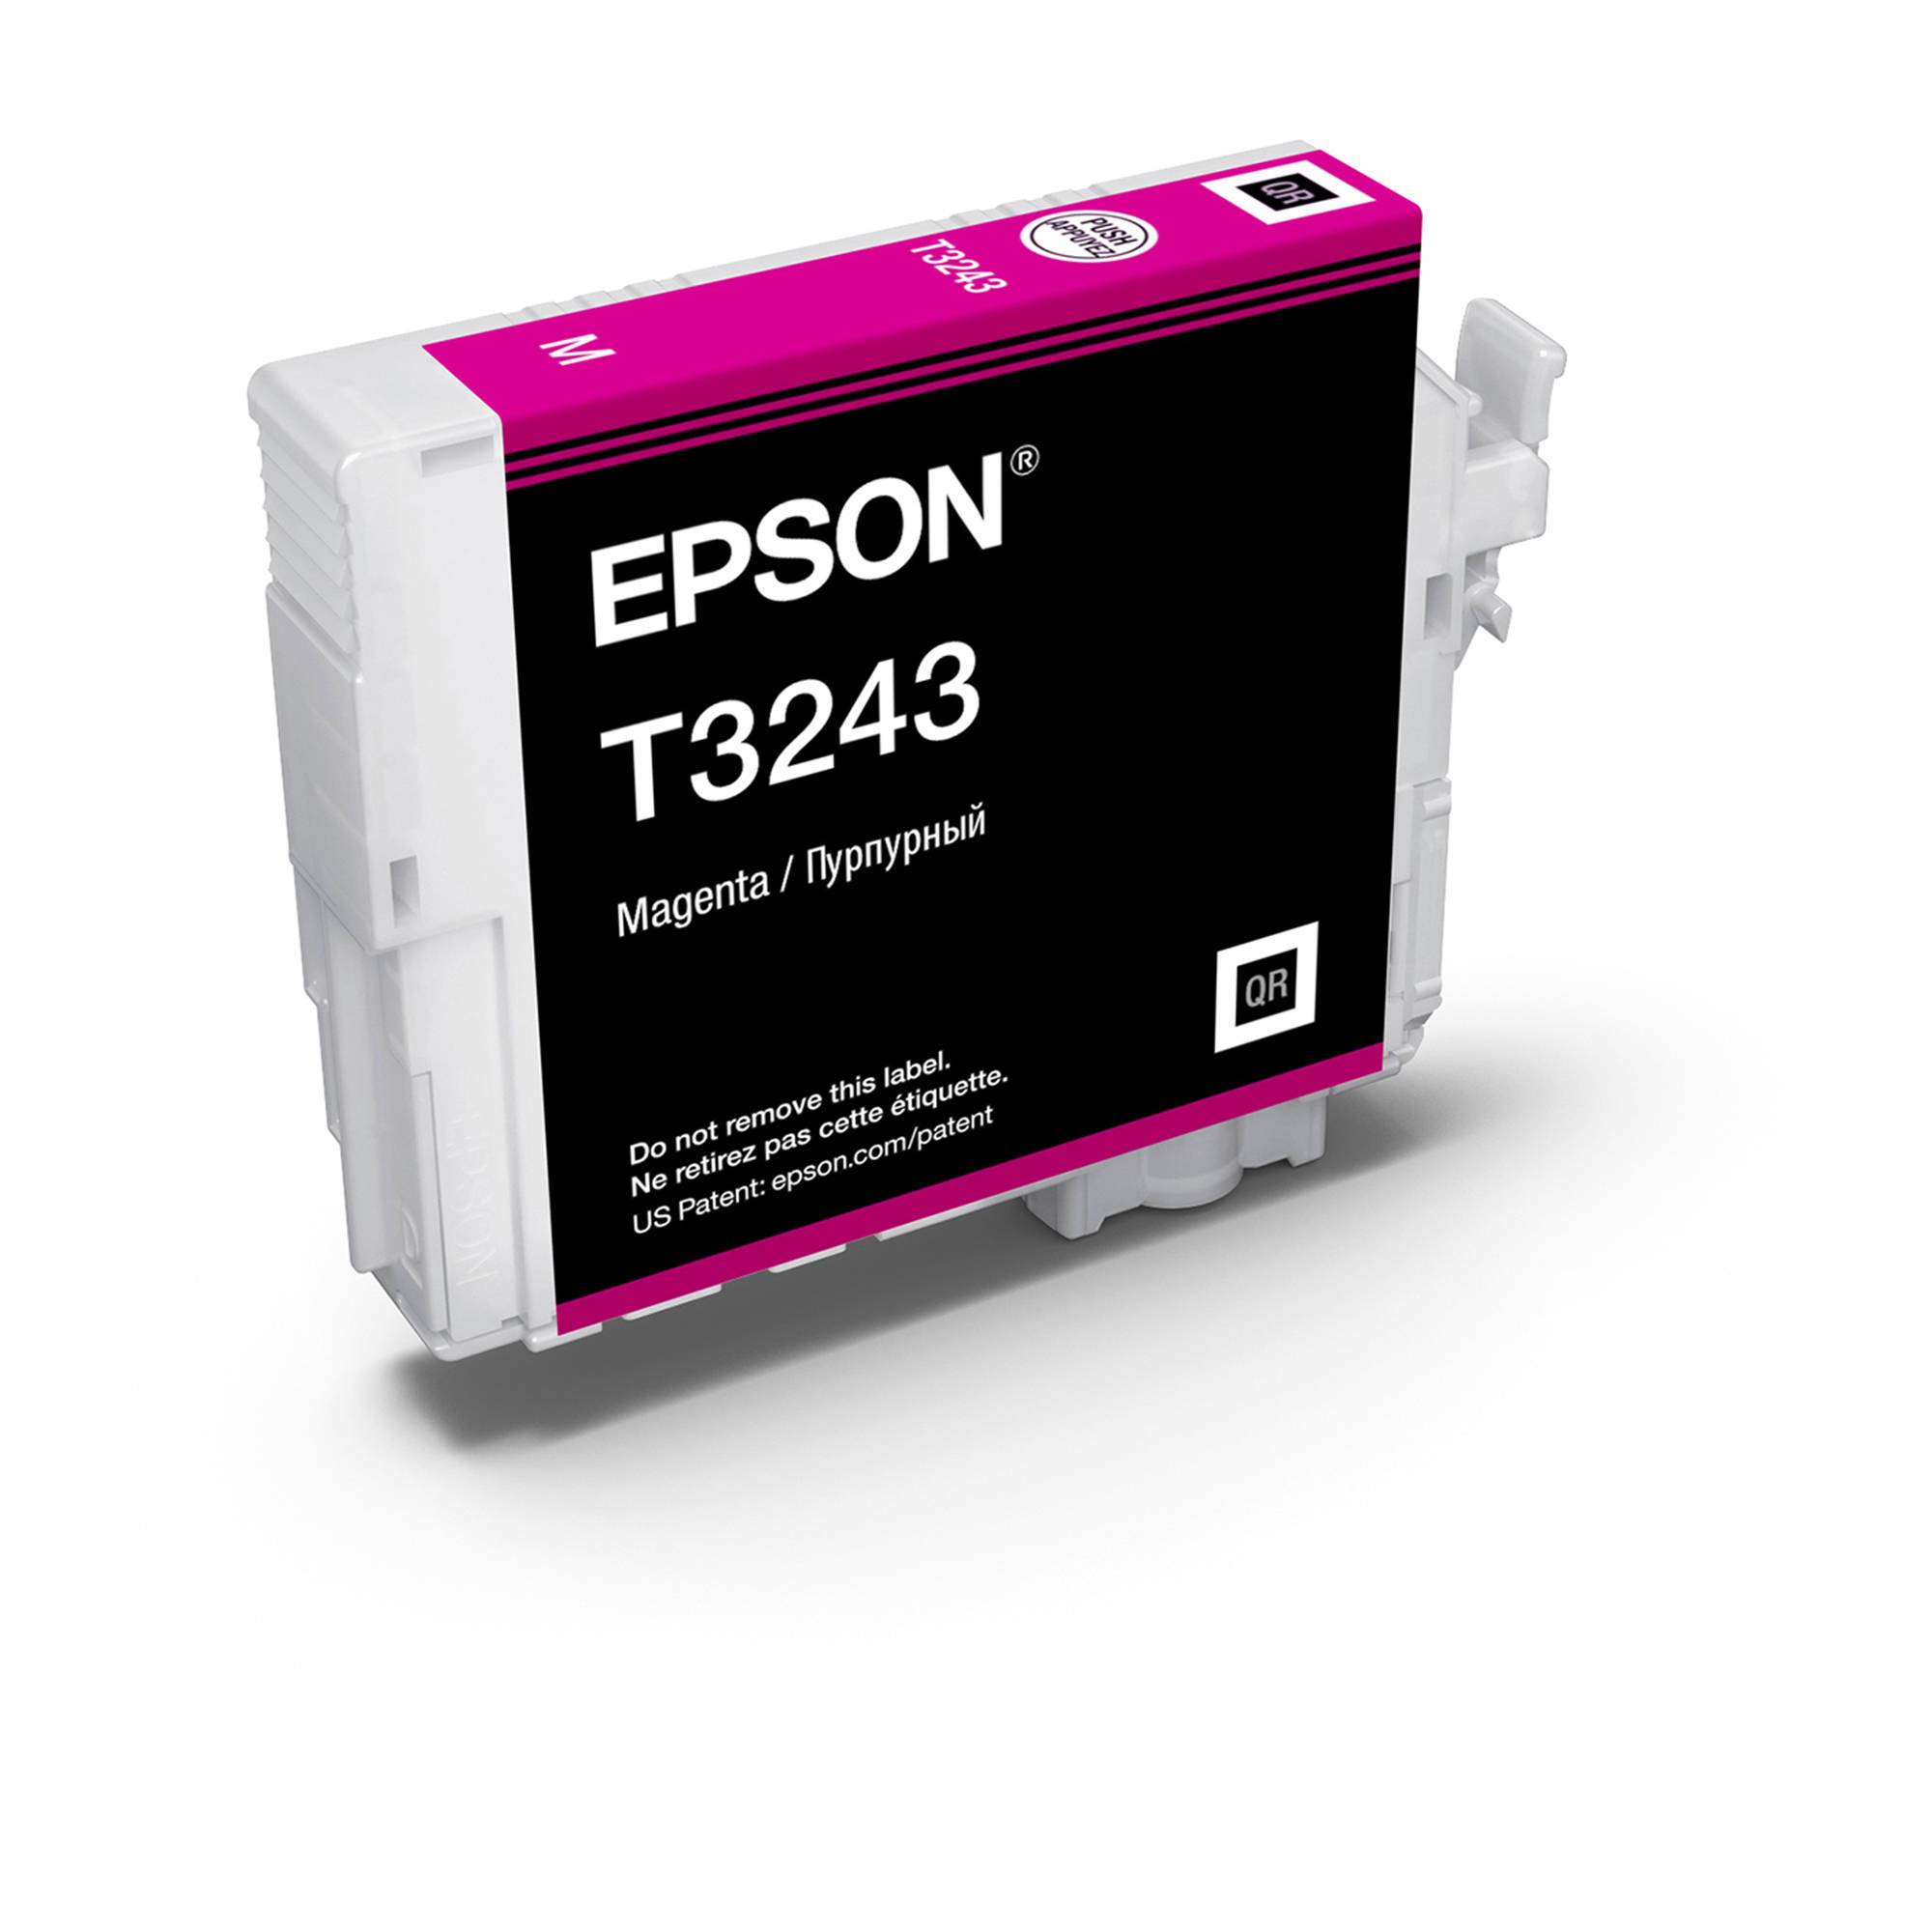 Absolute Toner T324320 EPSON T324 ULTRACHROME HG2 Magenta Ink Cartridge, St Epson Ink Cartridges